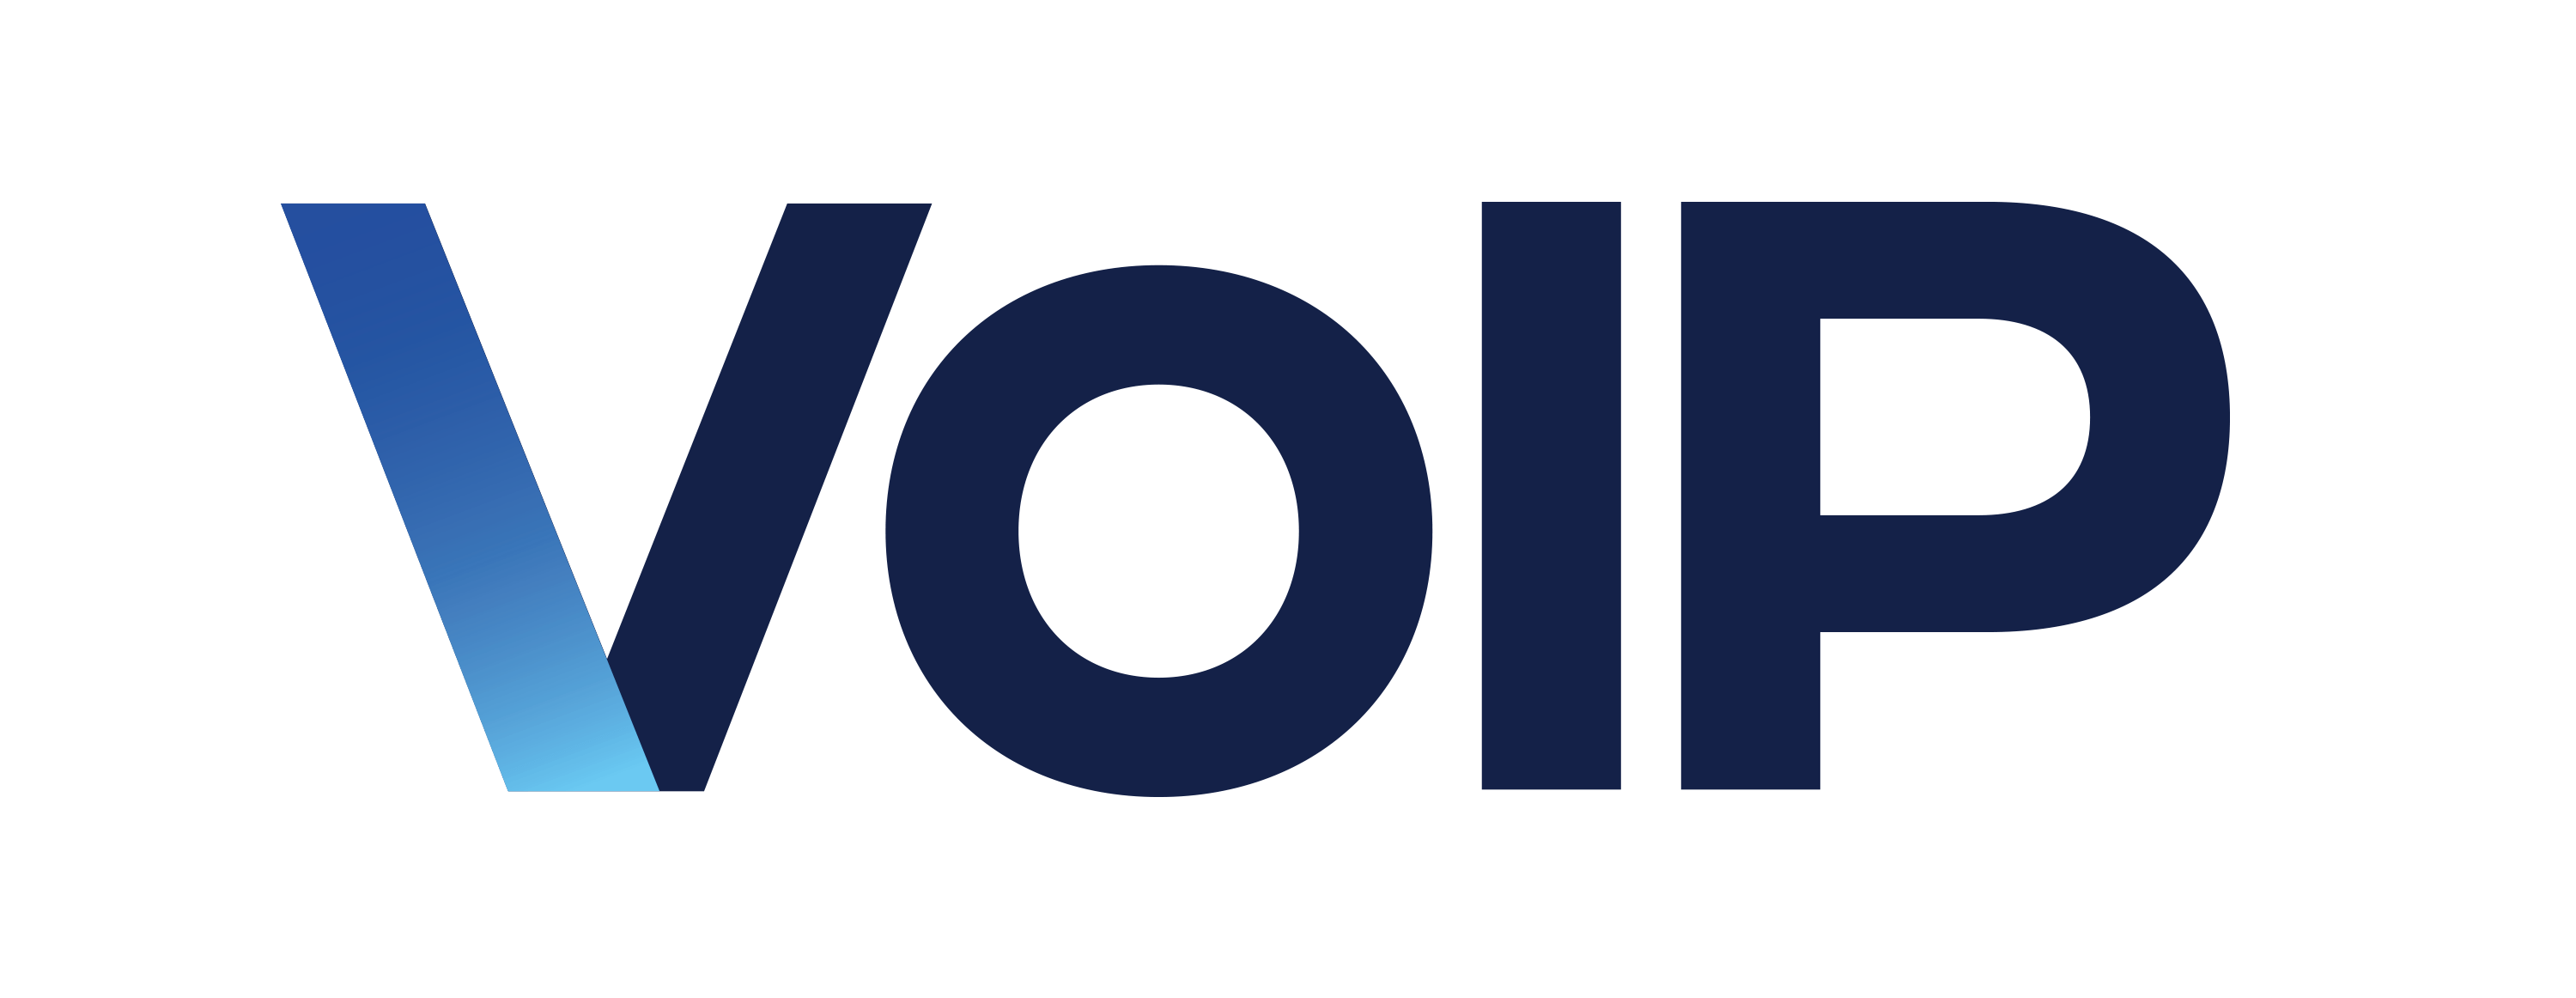 VoIP Logo - VoIP Logo RichBlue Beyond Showcase